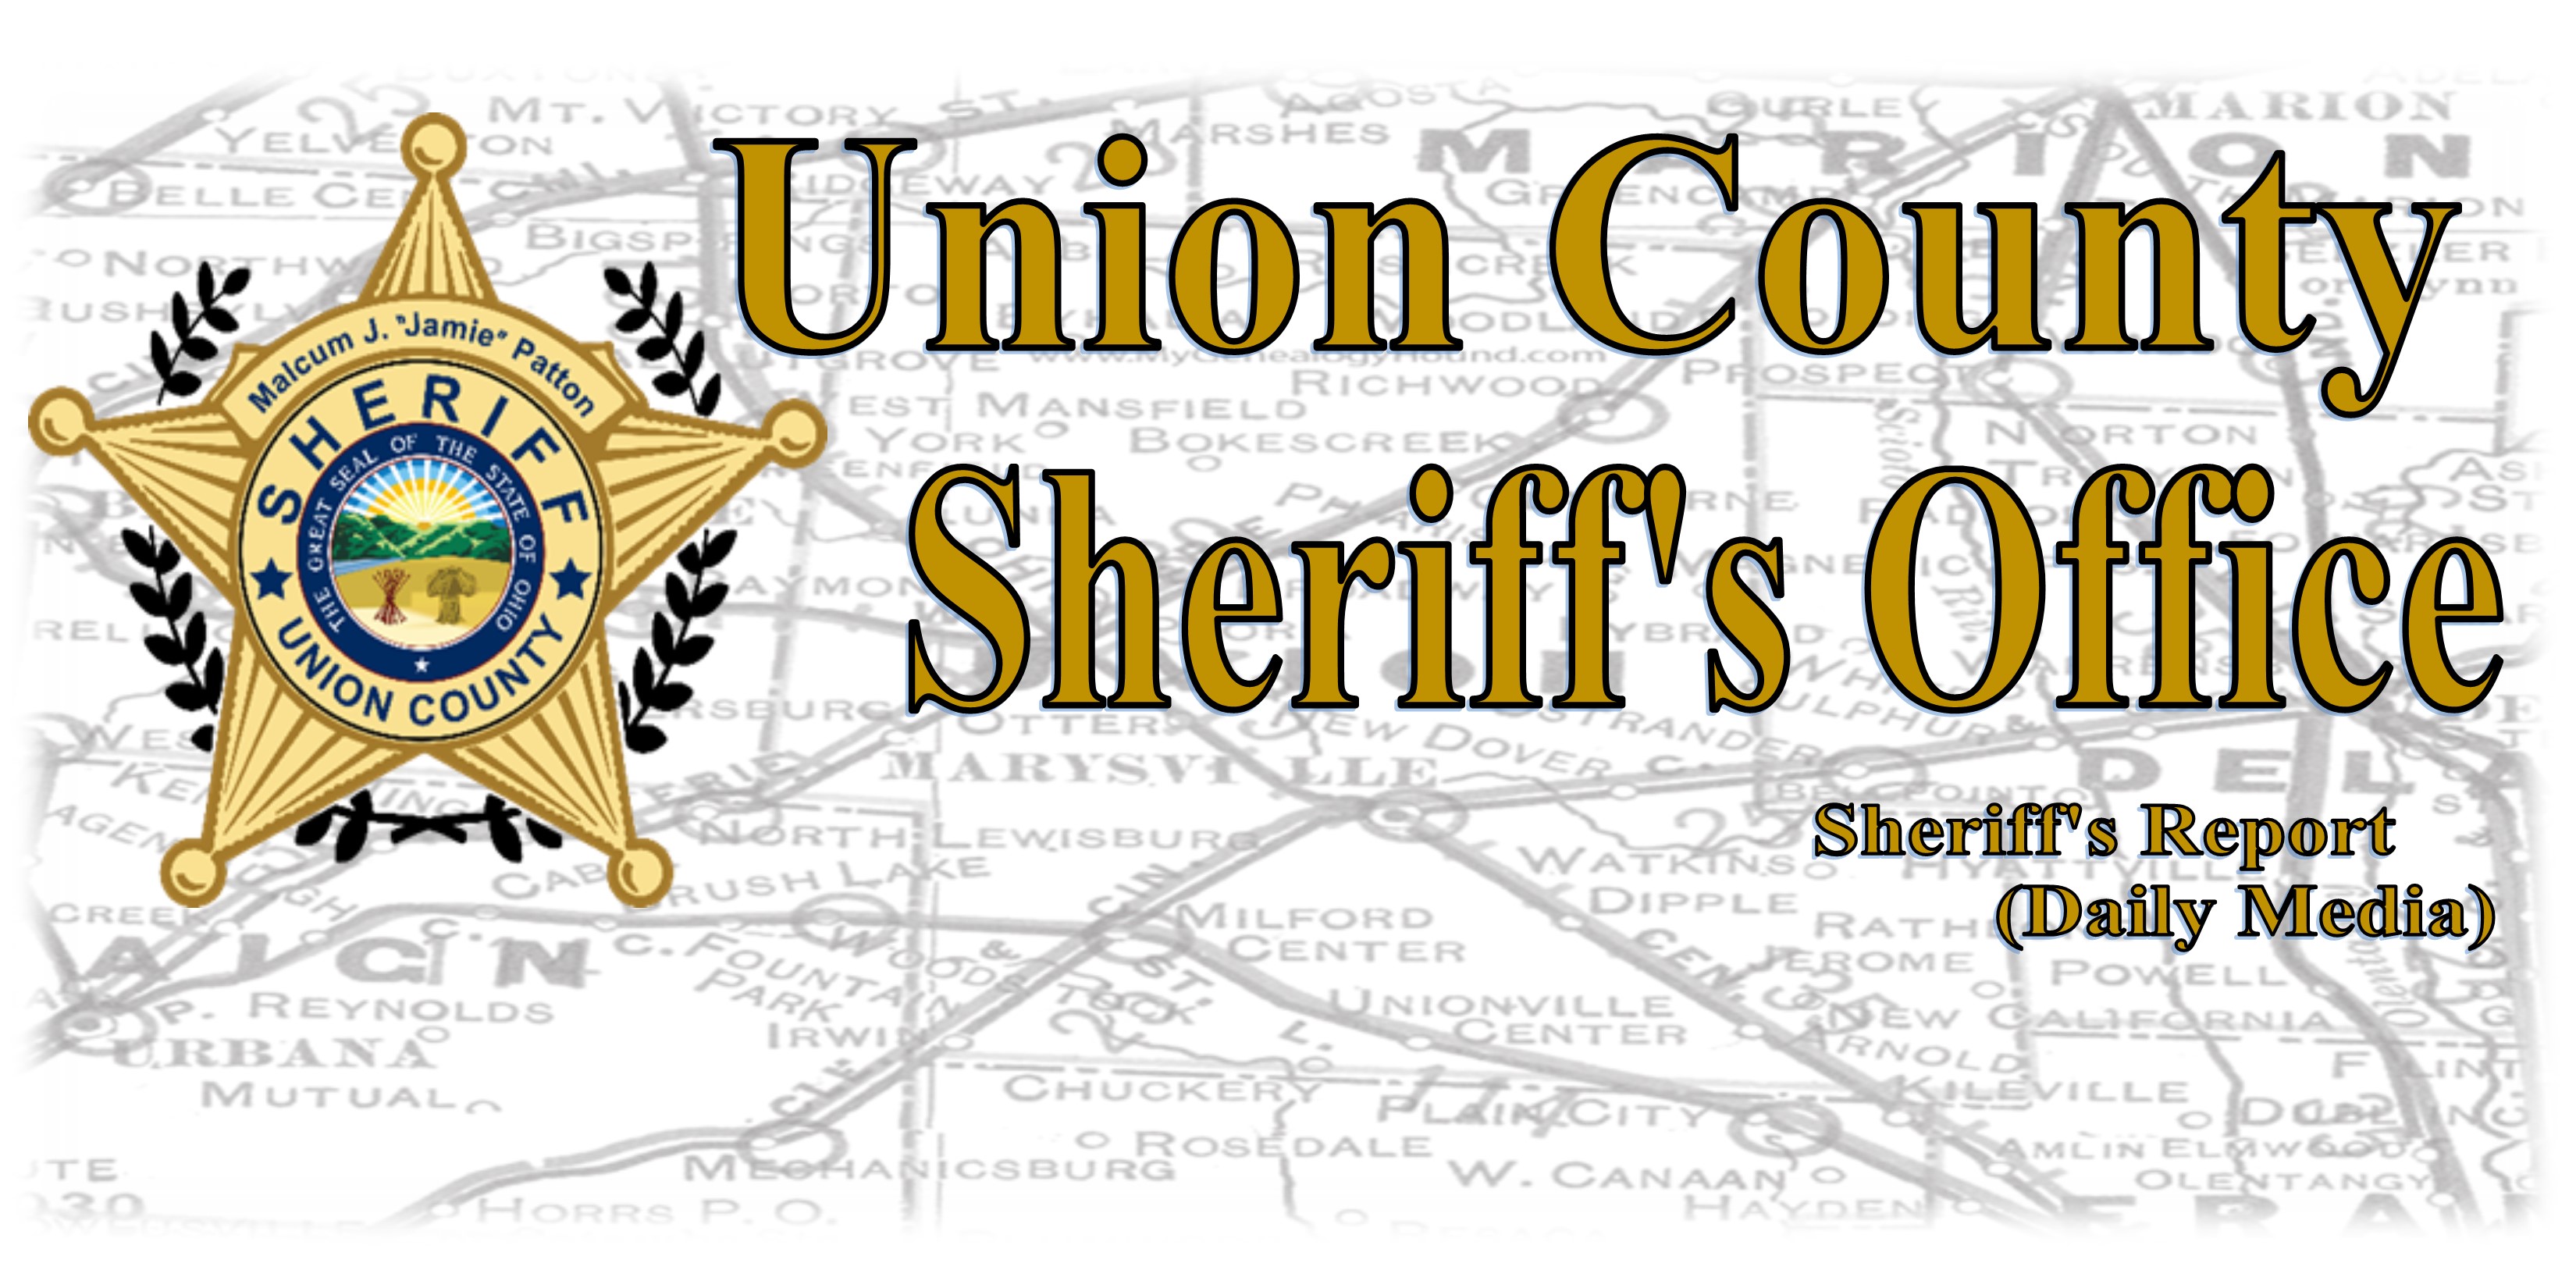 North Union Community Day - Union County Daily Digital